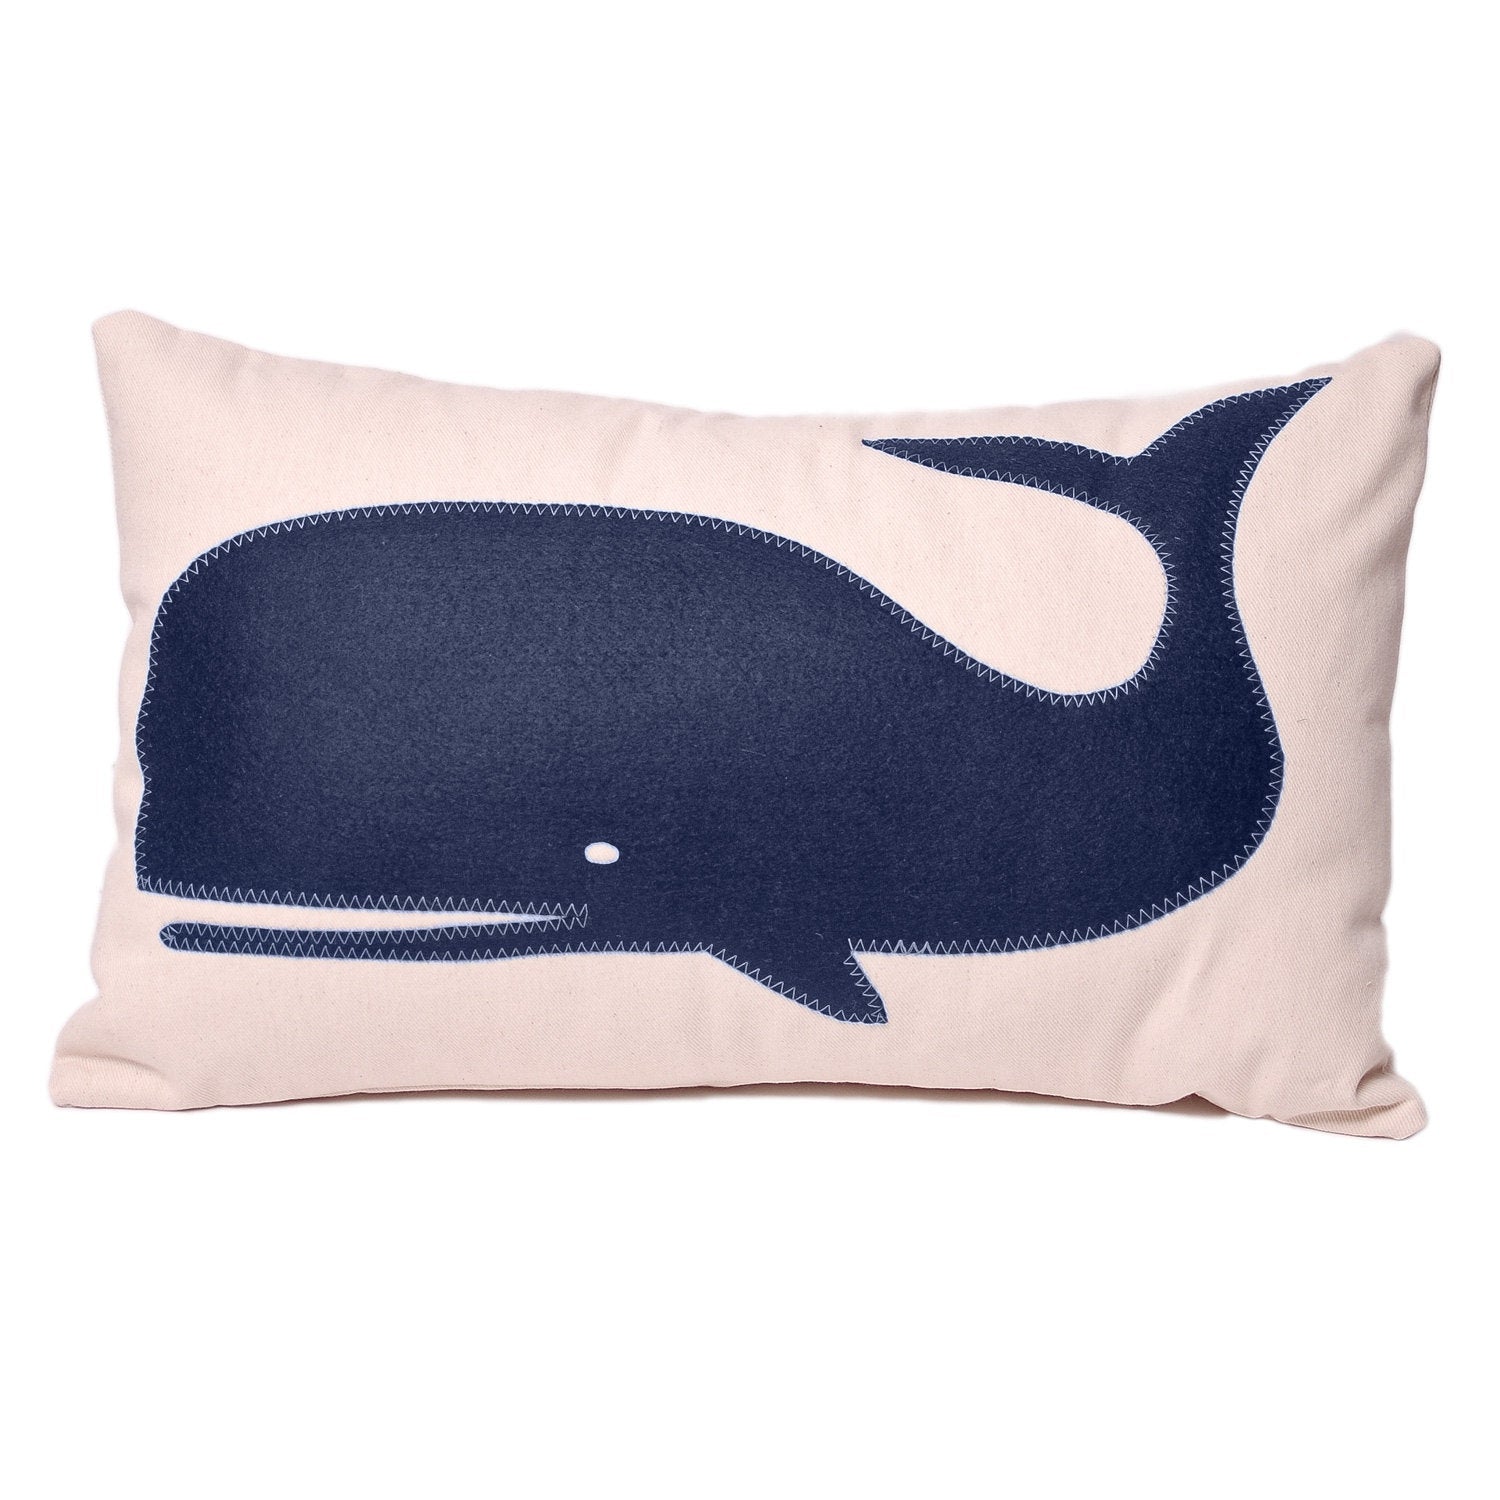 14x21" Ollie the Navy Whale lumbar pillow